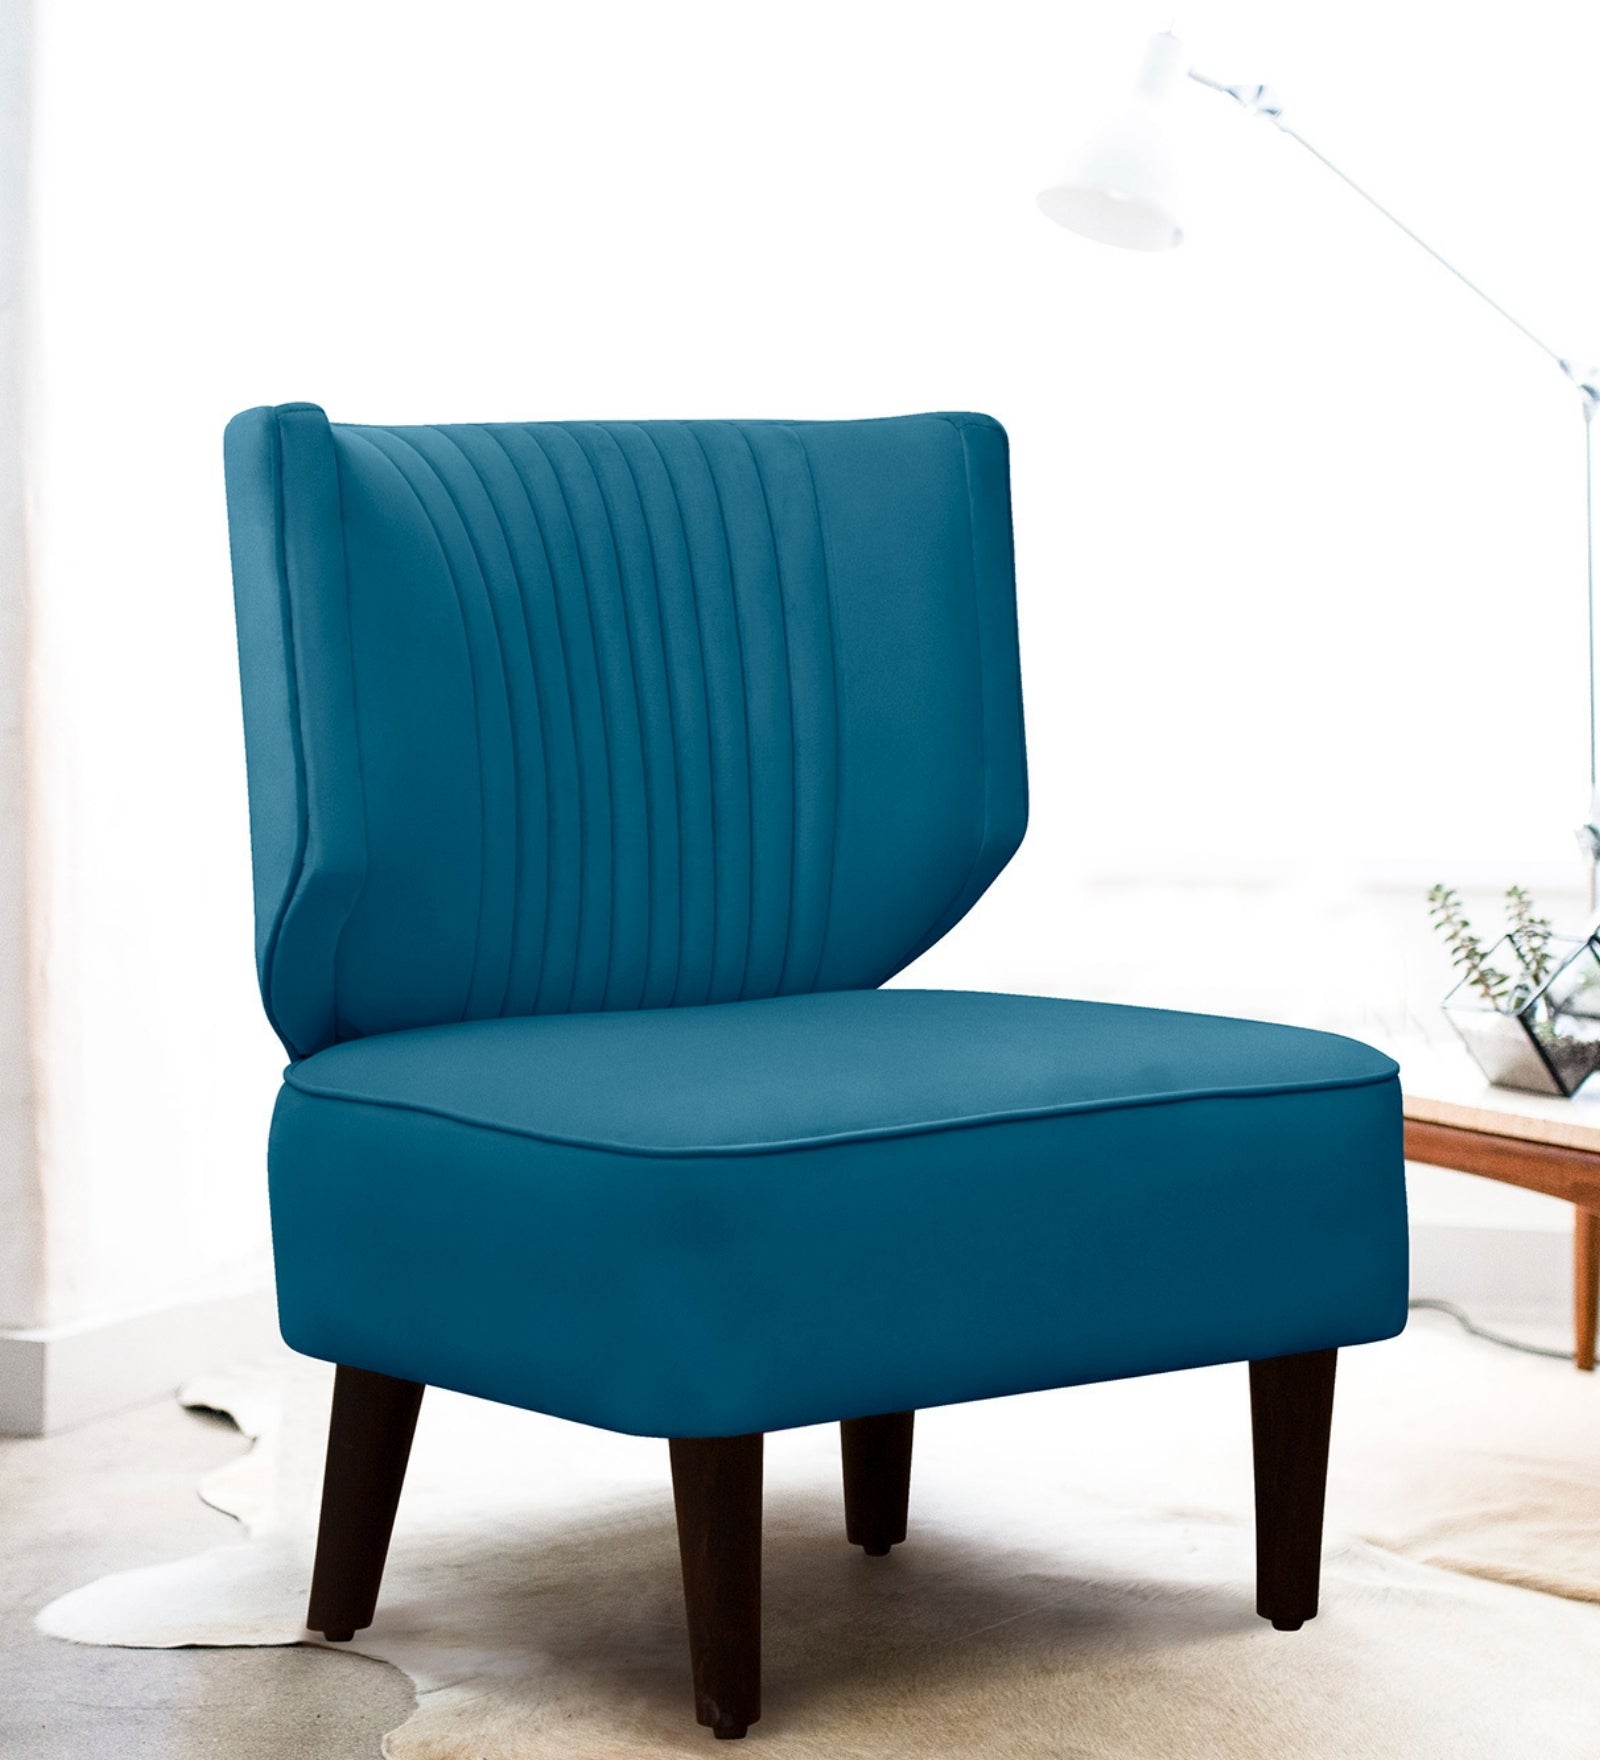 Robby Velvet Accent Chair in Aqua Blue Colour